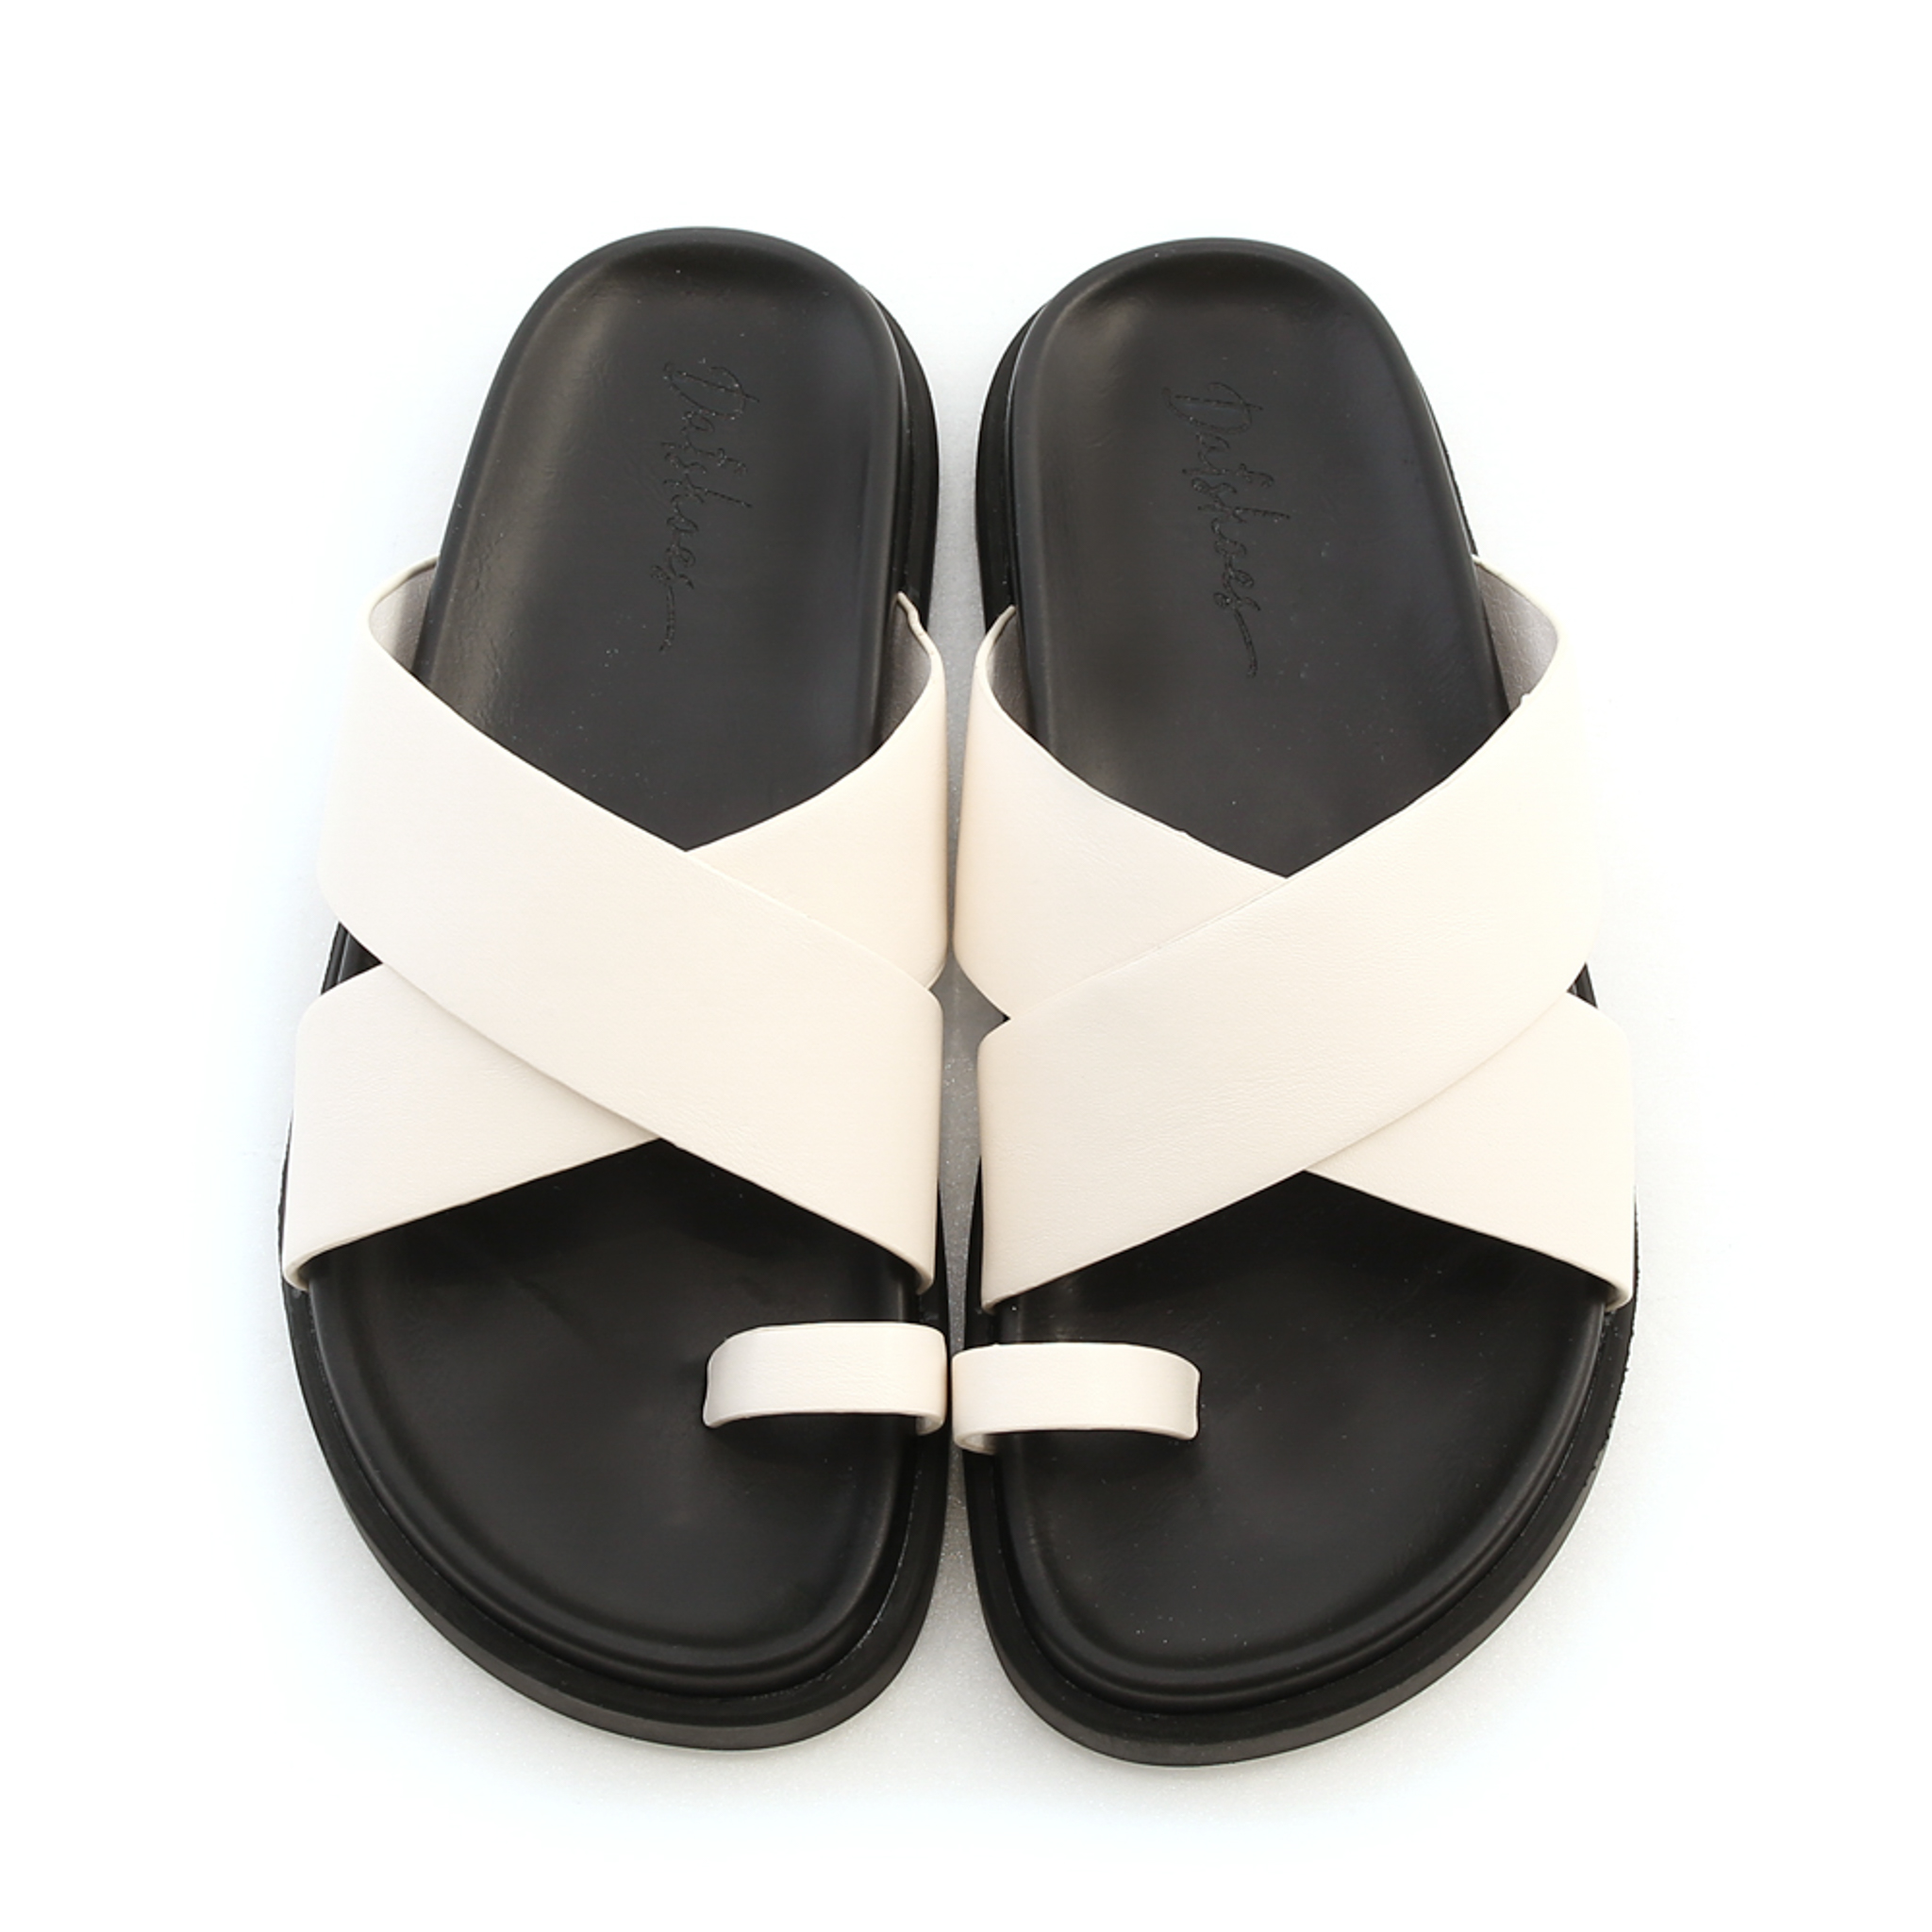 Wide strap Cross-over Thick Sole Sandals Vanilla